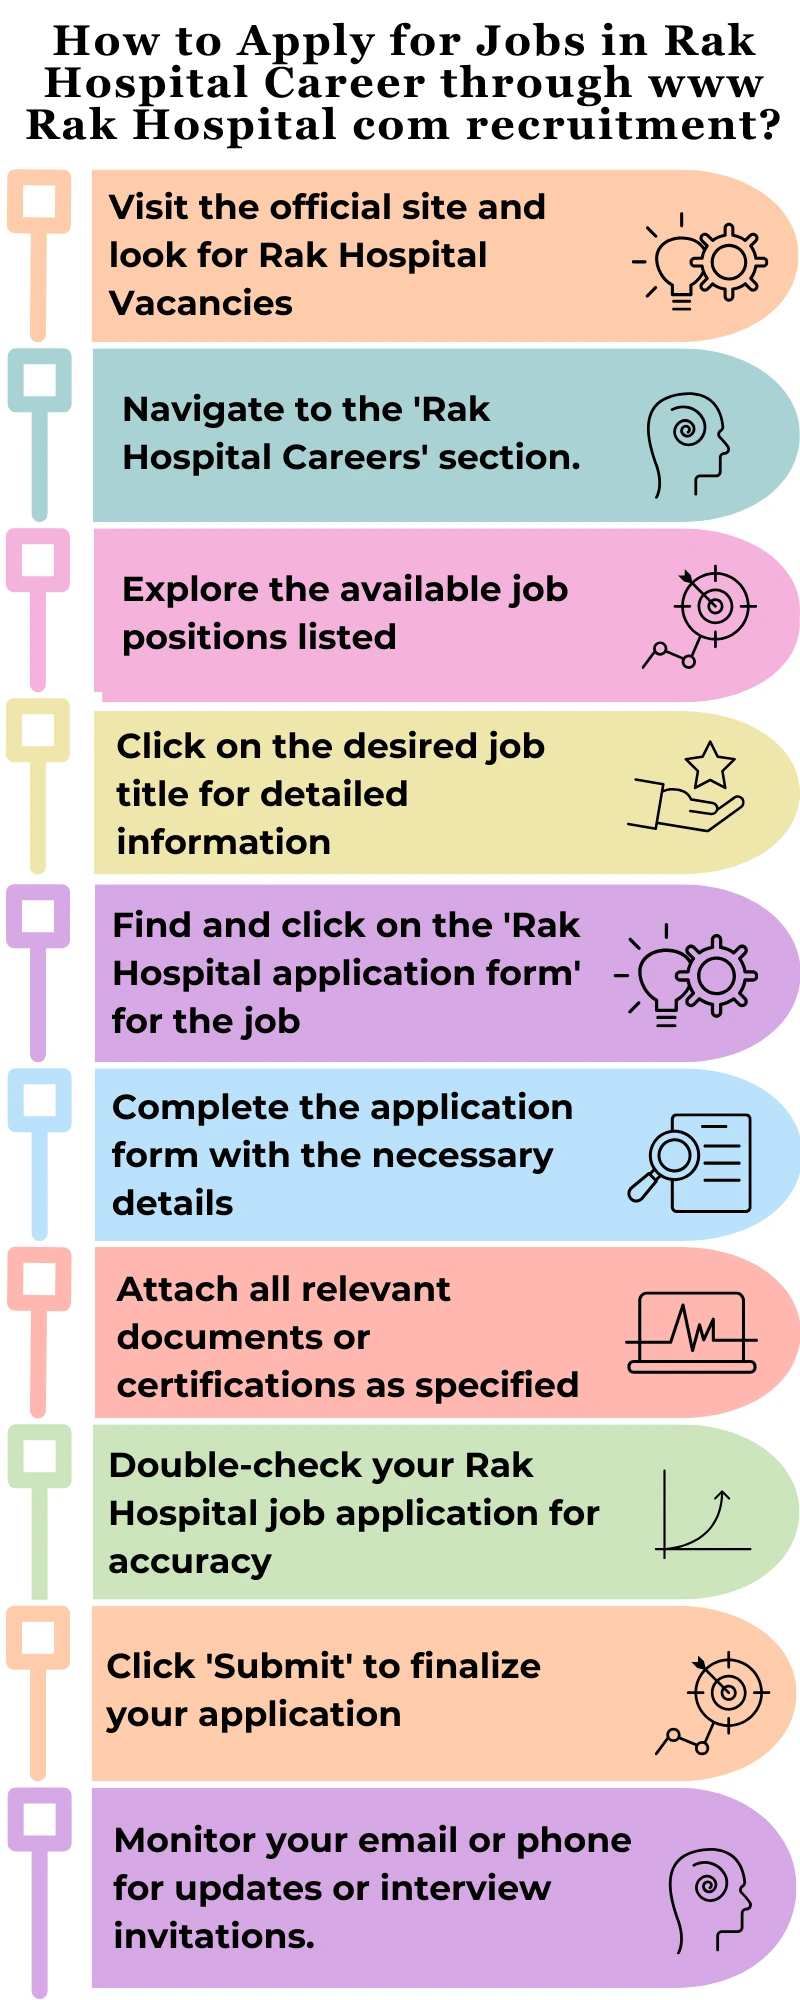 How to Apply for Jobs in Rak Hospital Career through www Rak Hospital com recruitment?